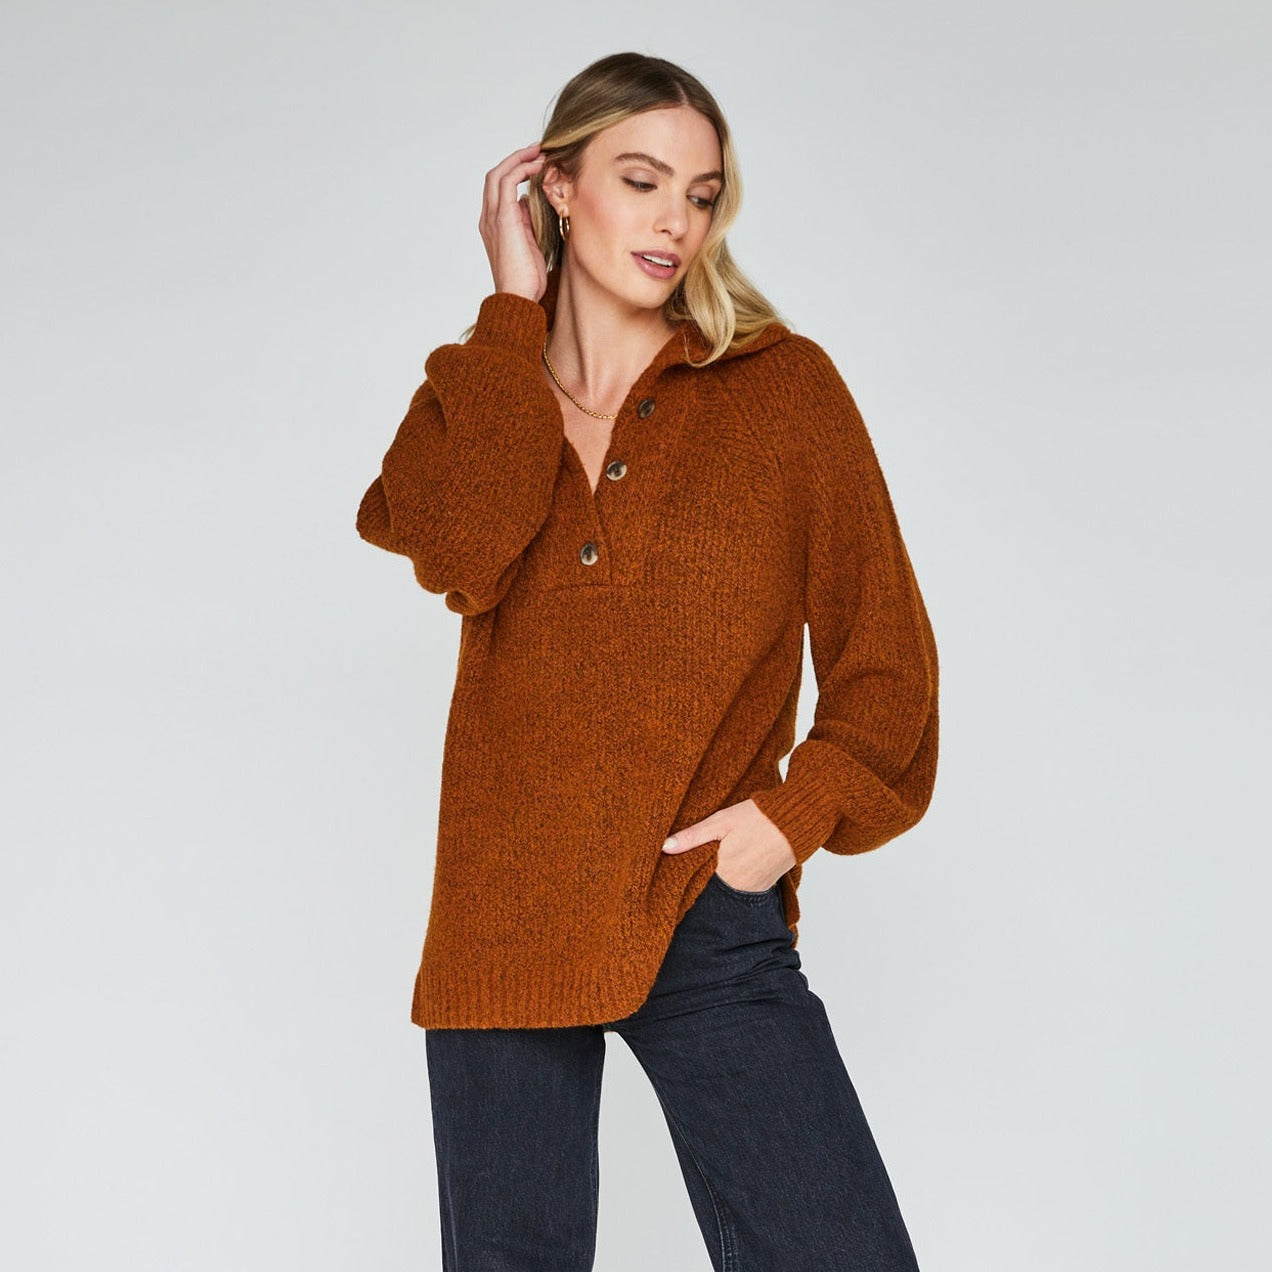 Alden Pullover Sweater